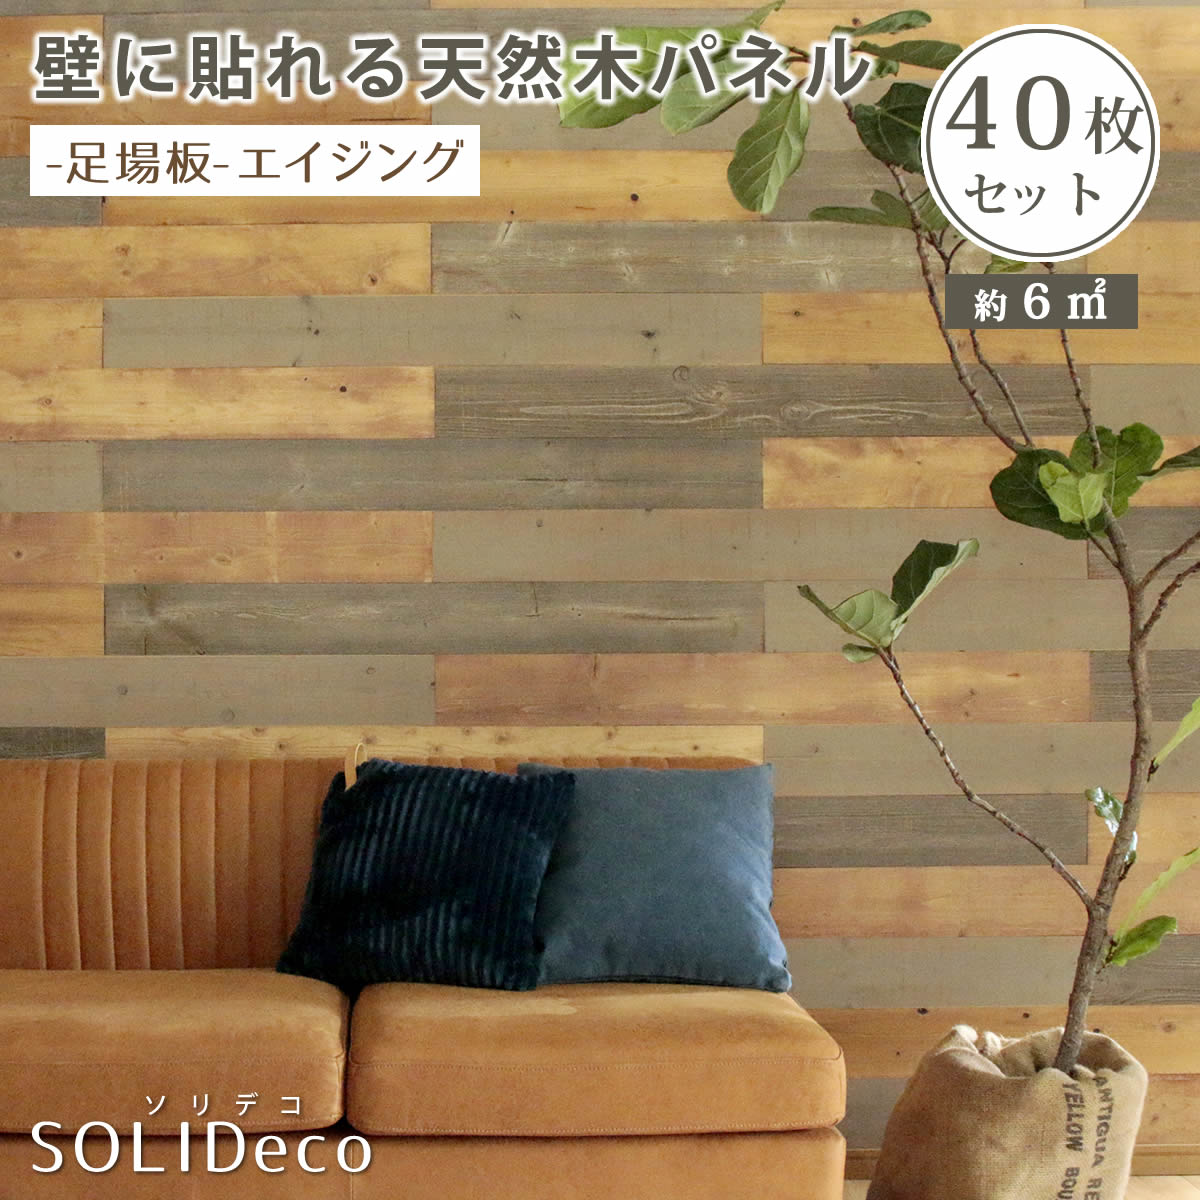 SOLIDECO 壁に貼れる天然木パネル 40枚組（約6m2）【送料無料 壁パネル ウォールパネル ウッドパネル DIY 壁紙】